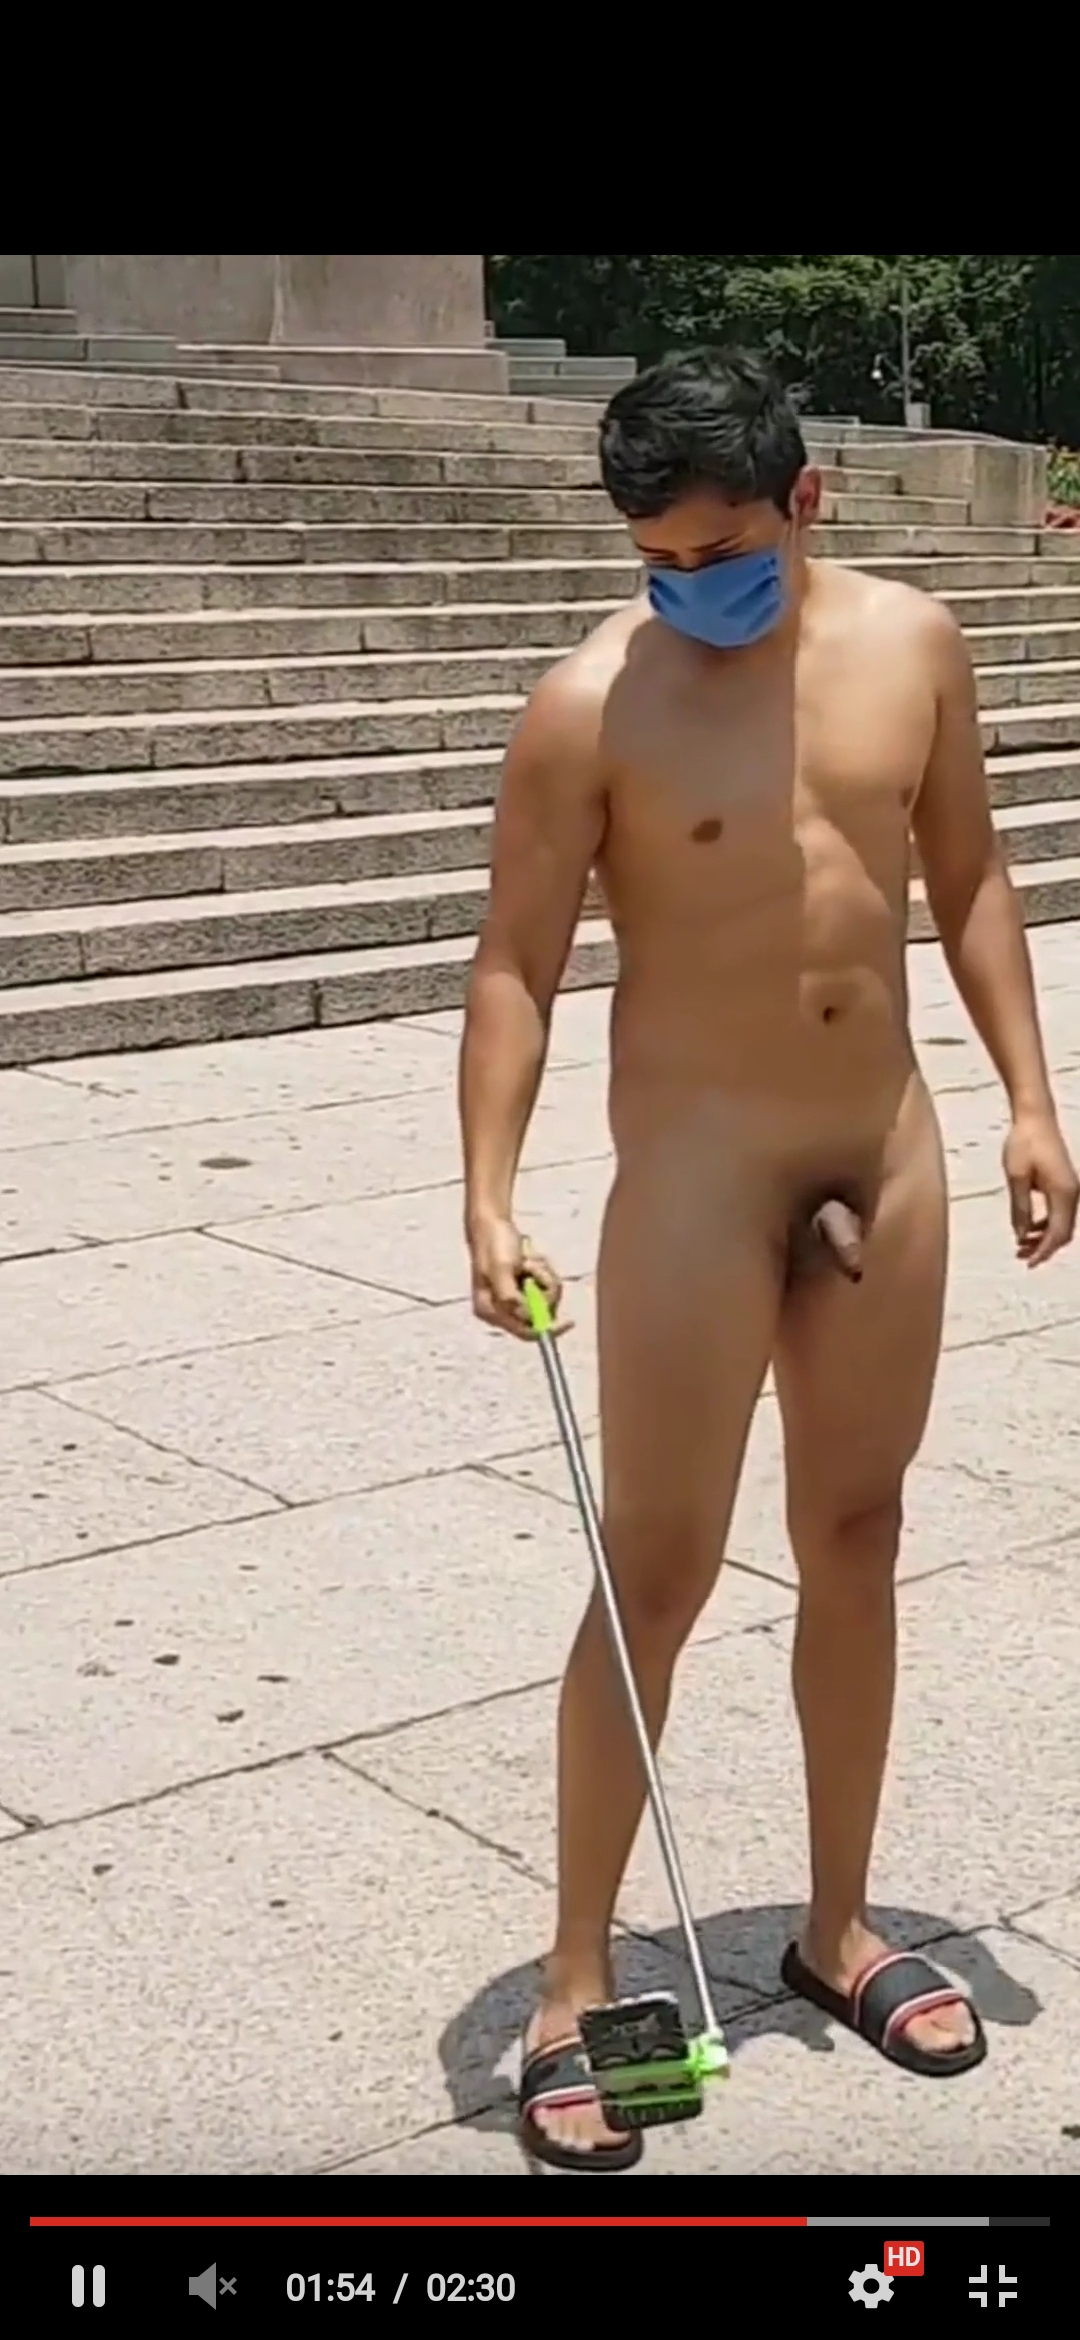 Wnbr Public Nude Asians - Nude men in public wnbr - ThisVid.com